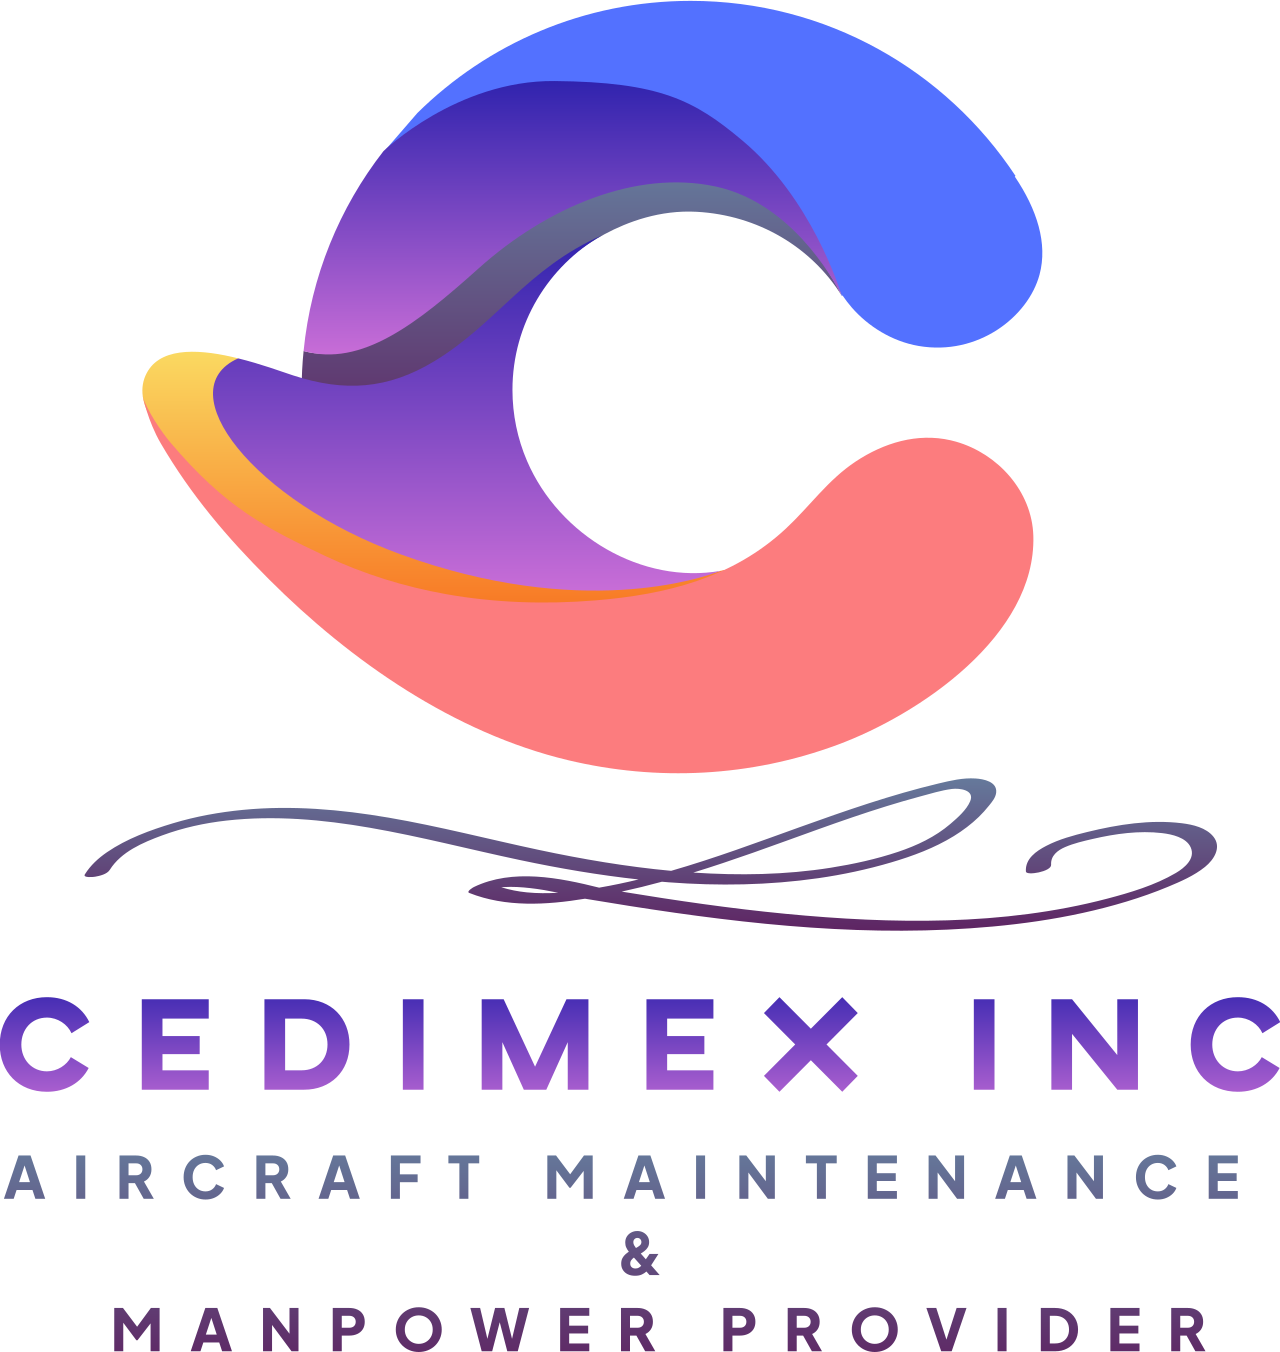 CEDIMEX INC's web page